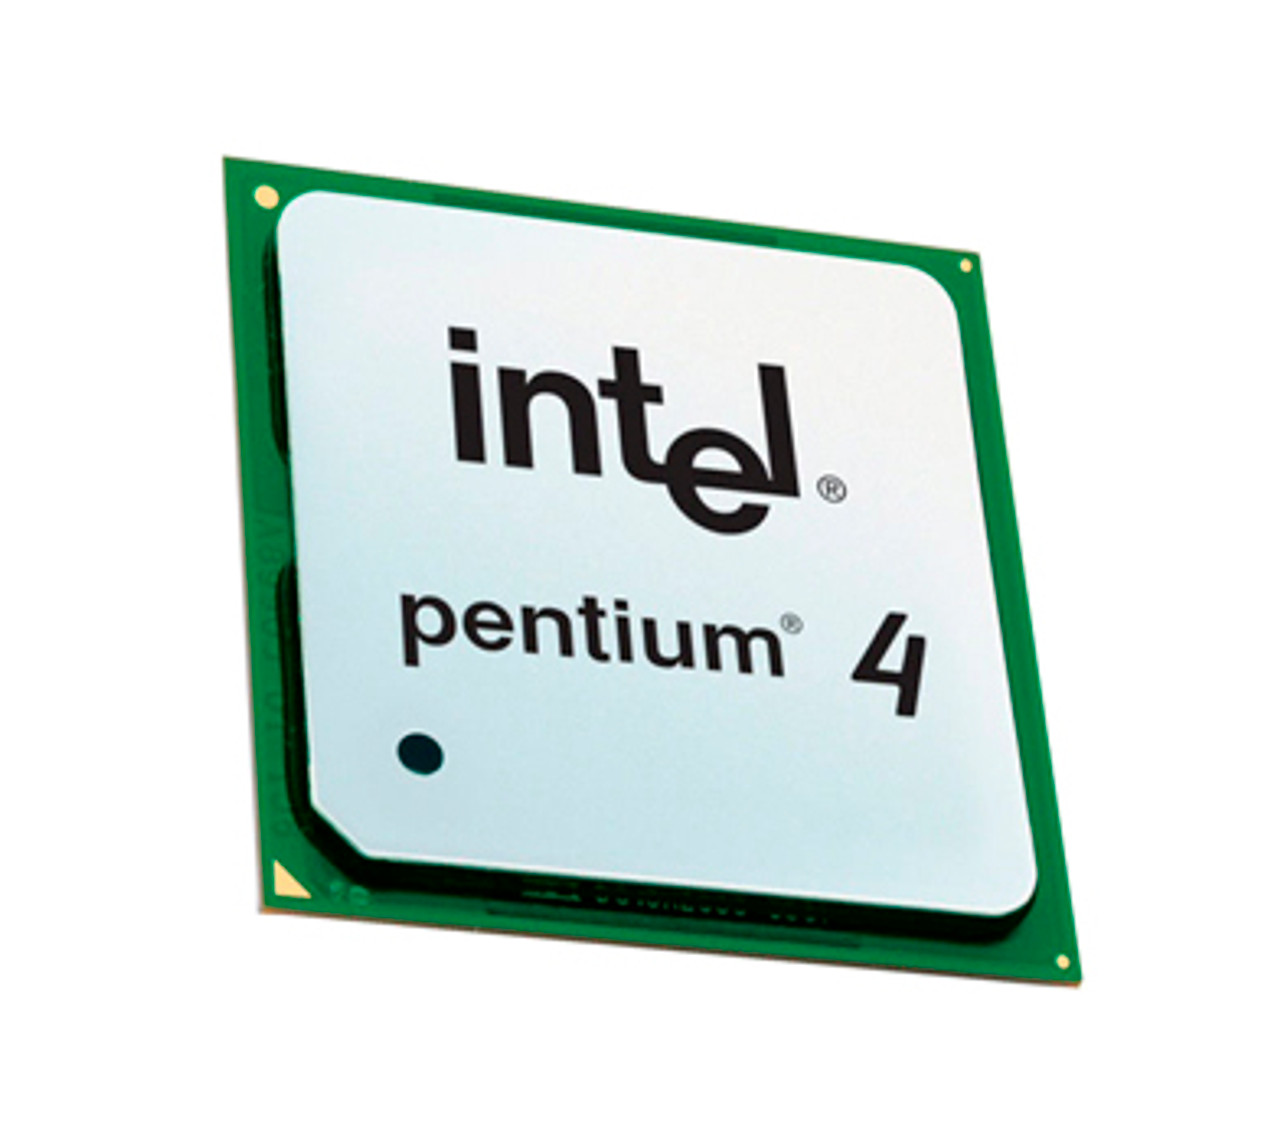 H8427 - Dell Intel Xeon 3.0GHz 1MB L2 Cache 800MHz FSB 604-Pin Micro-FCPGA Socket Processor for PowerEdge ServerS & Precision workstation